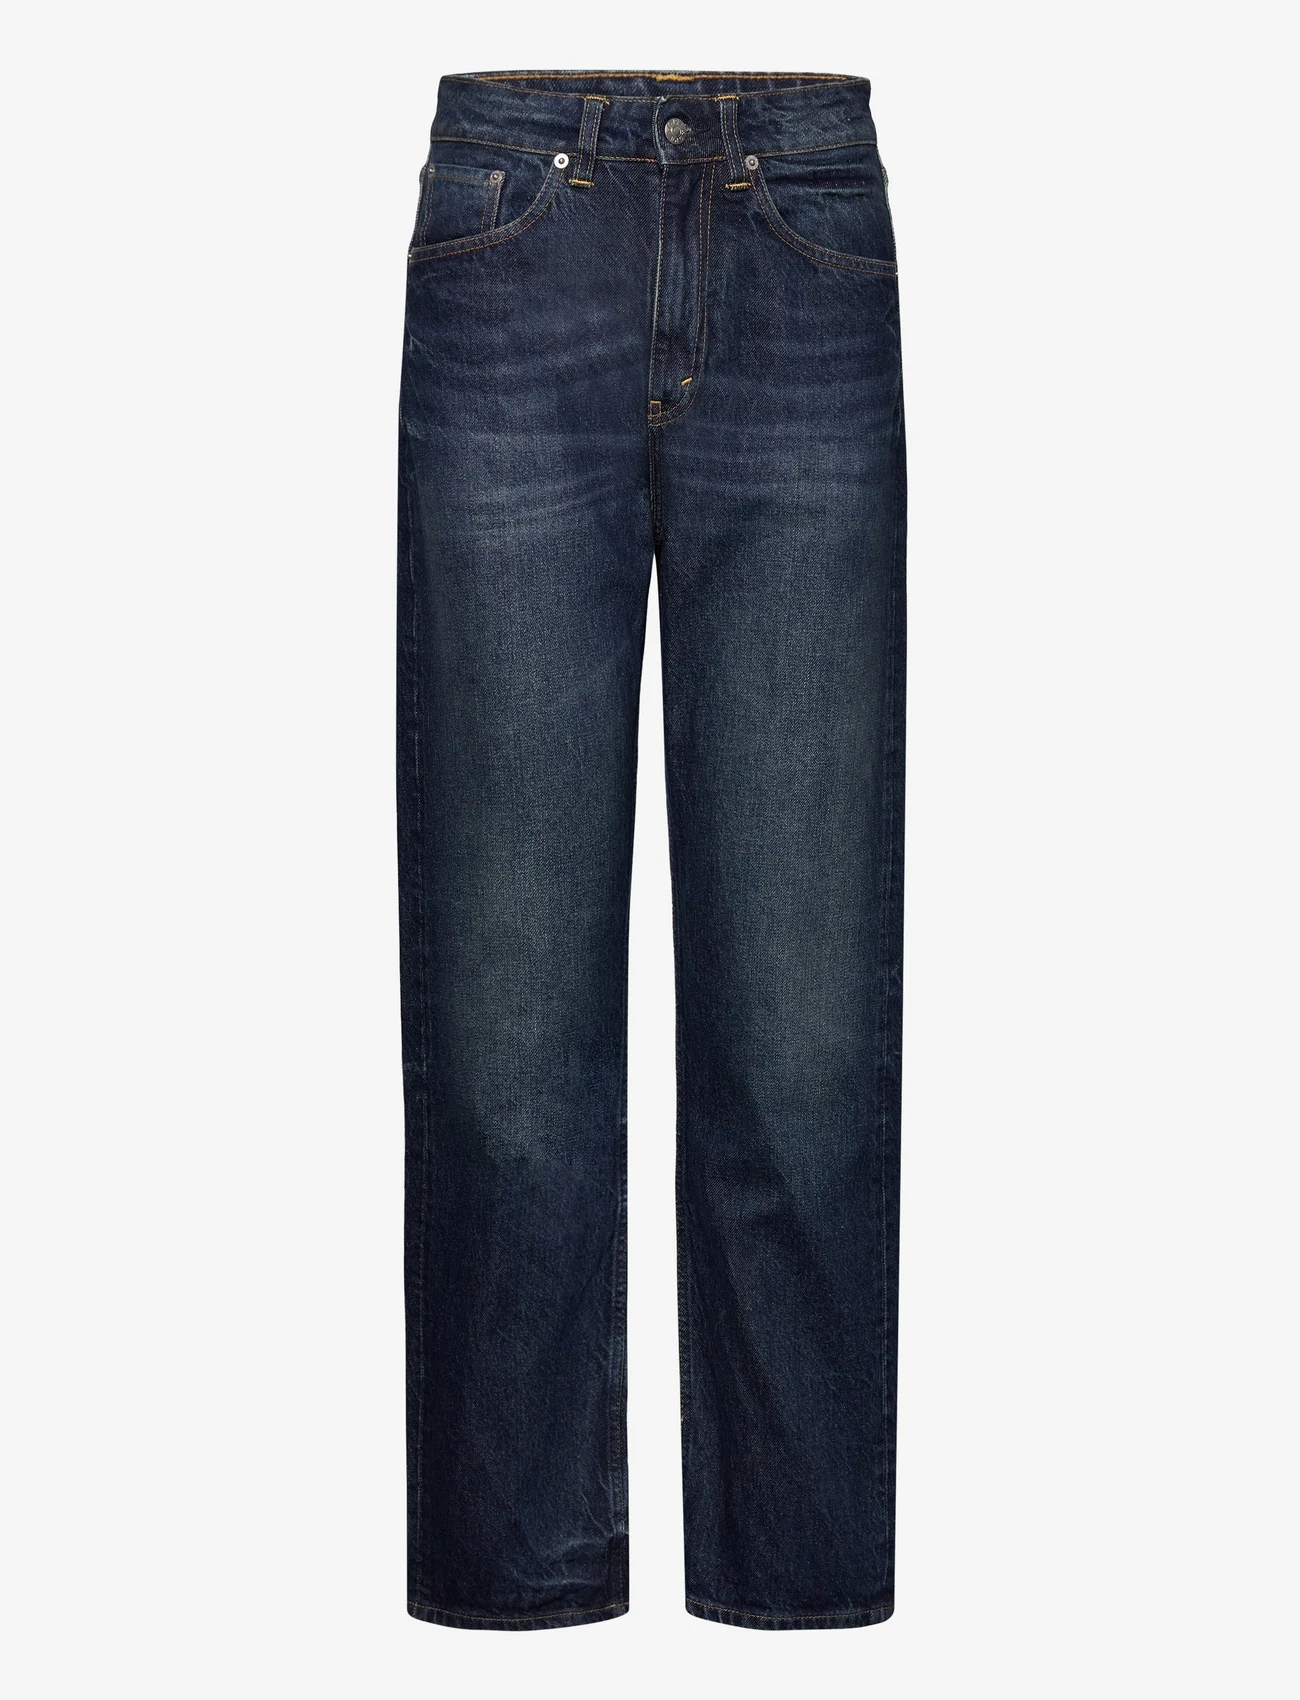 Hope - Slim High-Rise Jeans - vida jeans - dark blue vintage - 0